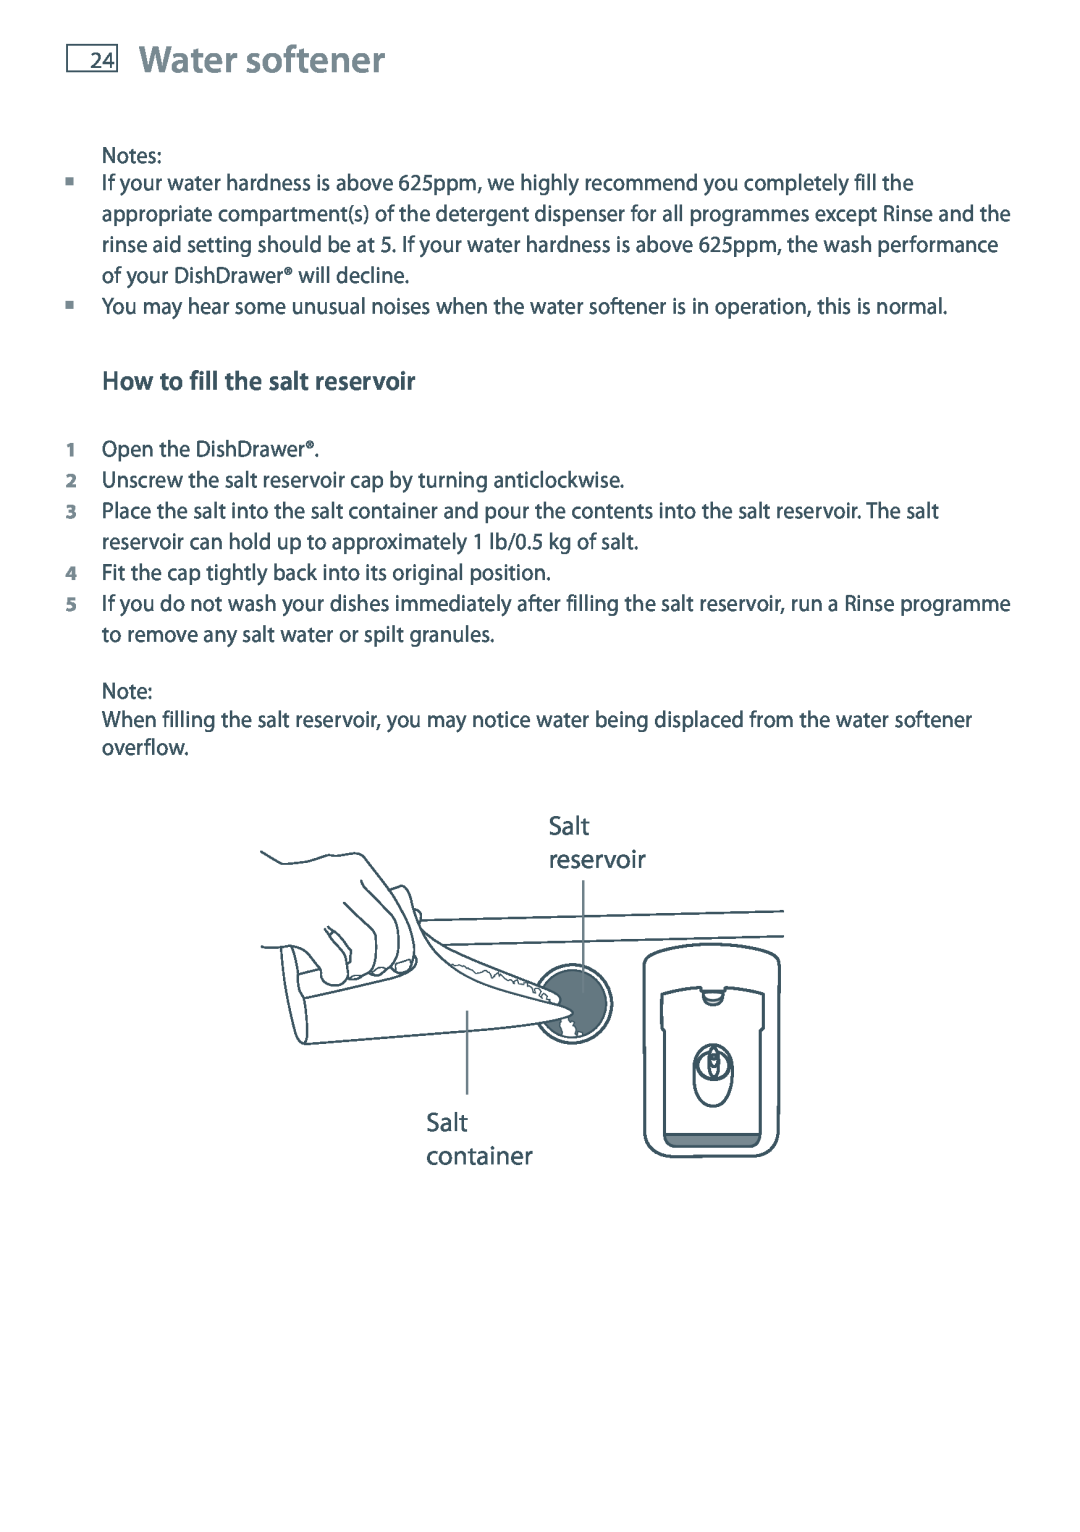 Maytag MEC7430W dimensions Water softener, How to fill the salt reservoir, Salt reservoir Salt container 